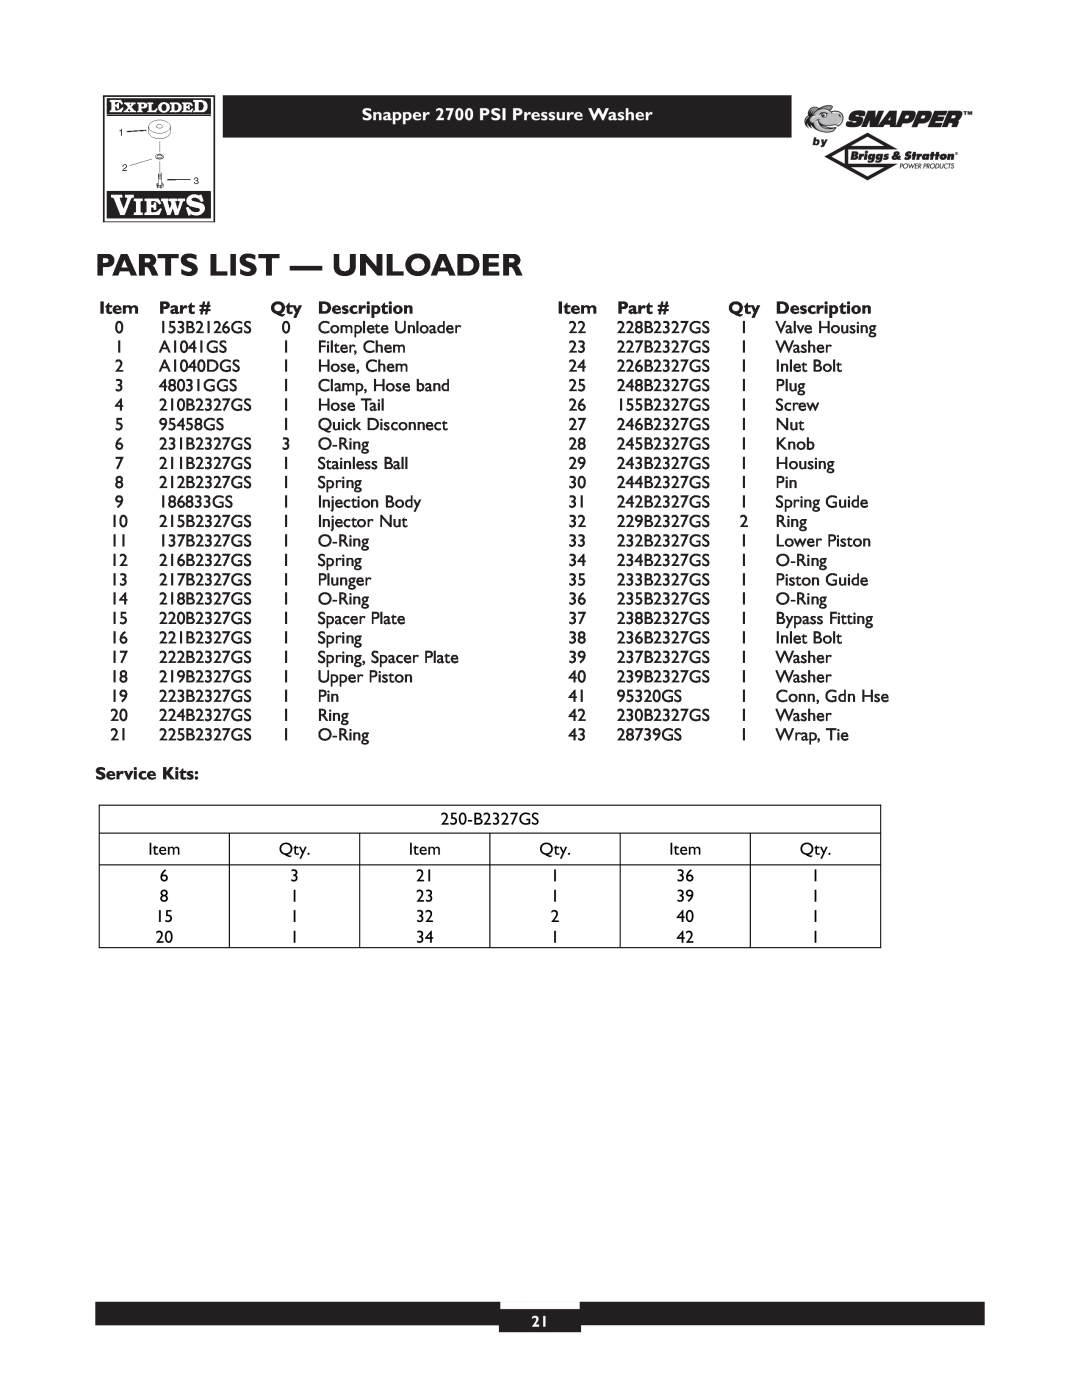 Briggs & Stratton 2700PSI owner manual Parts List - Unloader, Snapper 2700 PSI Pressure Washer, Description, Service Kits 